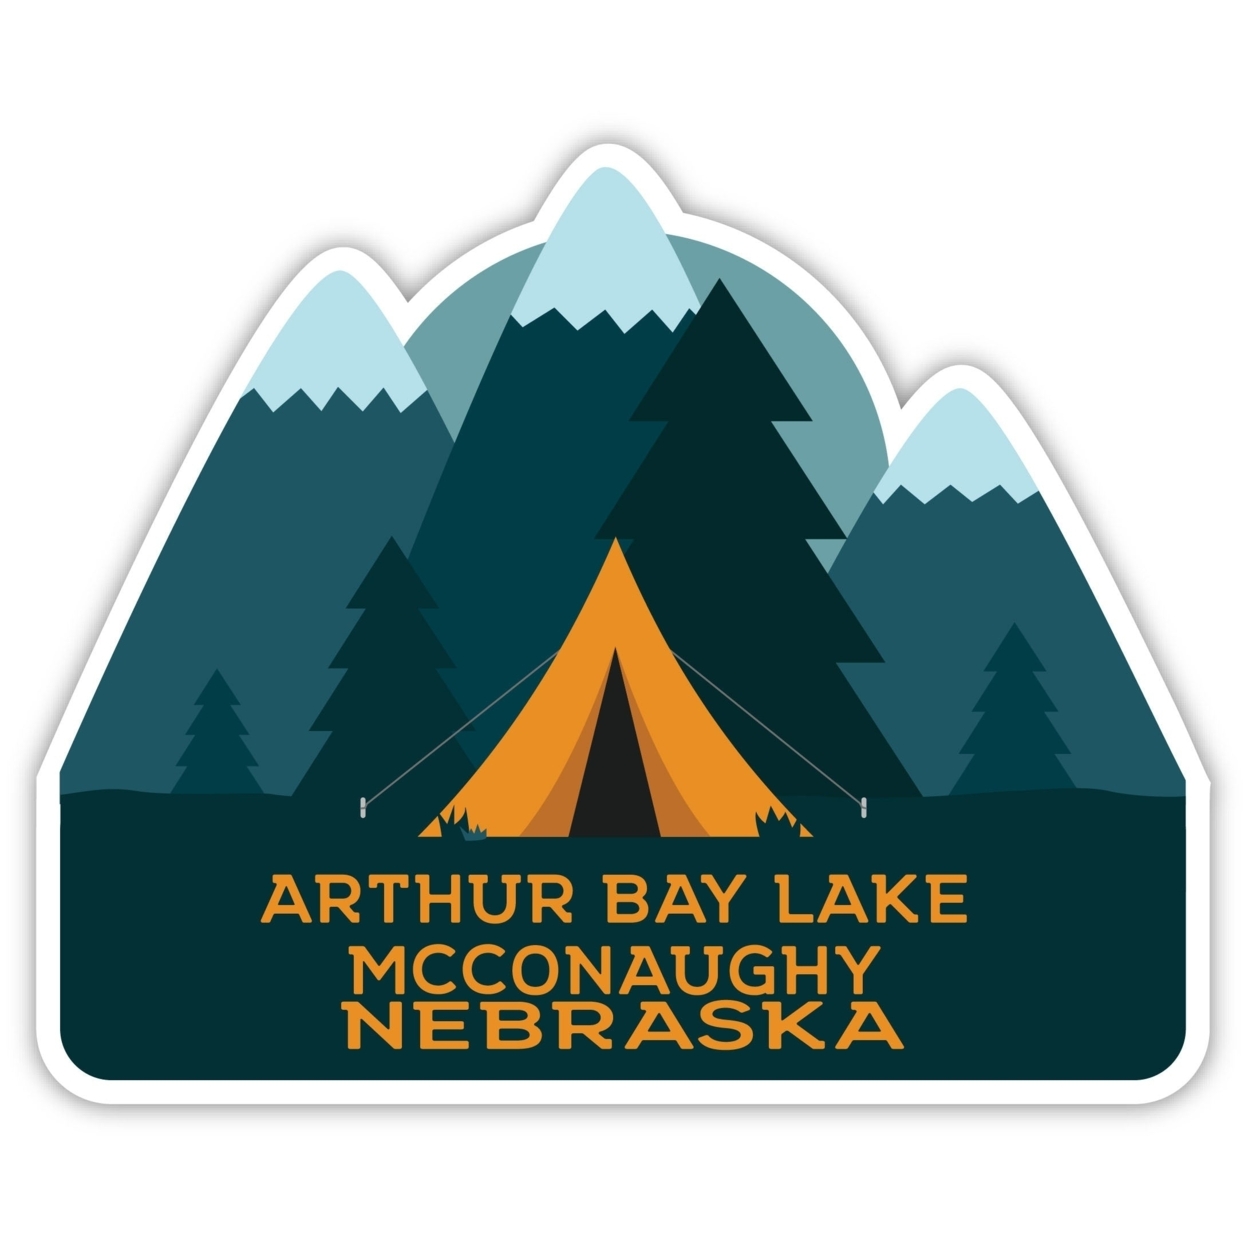 Arthur Bay Lake Mcconaughy Nebraska Souvenir Decorative Stickers (Choose Theme And Size) - Single Unit, 12-Inch, Tent